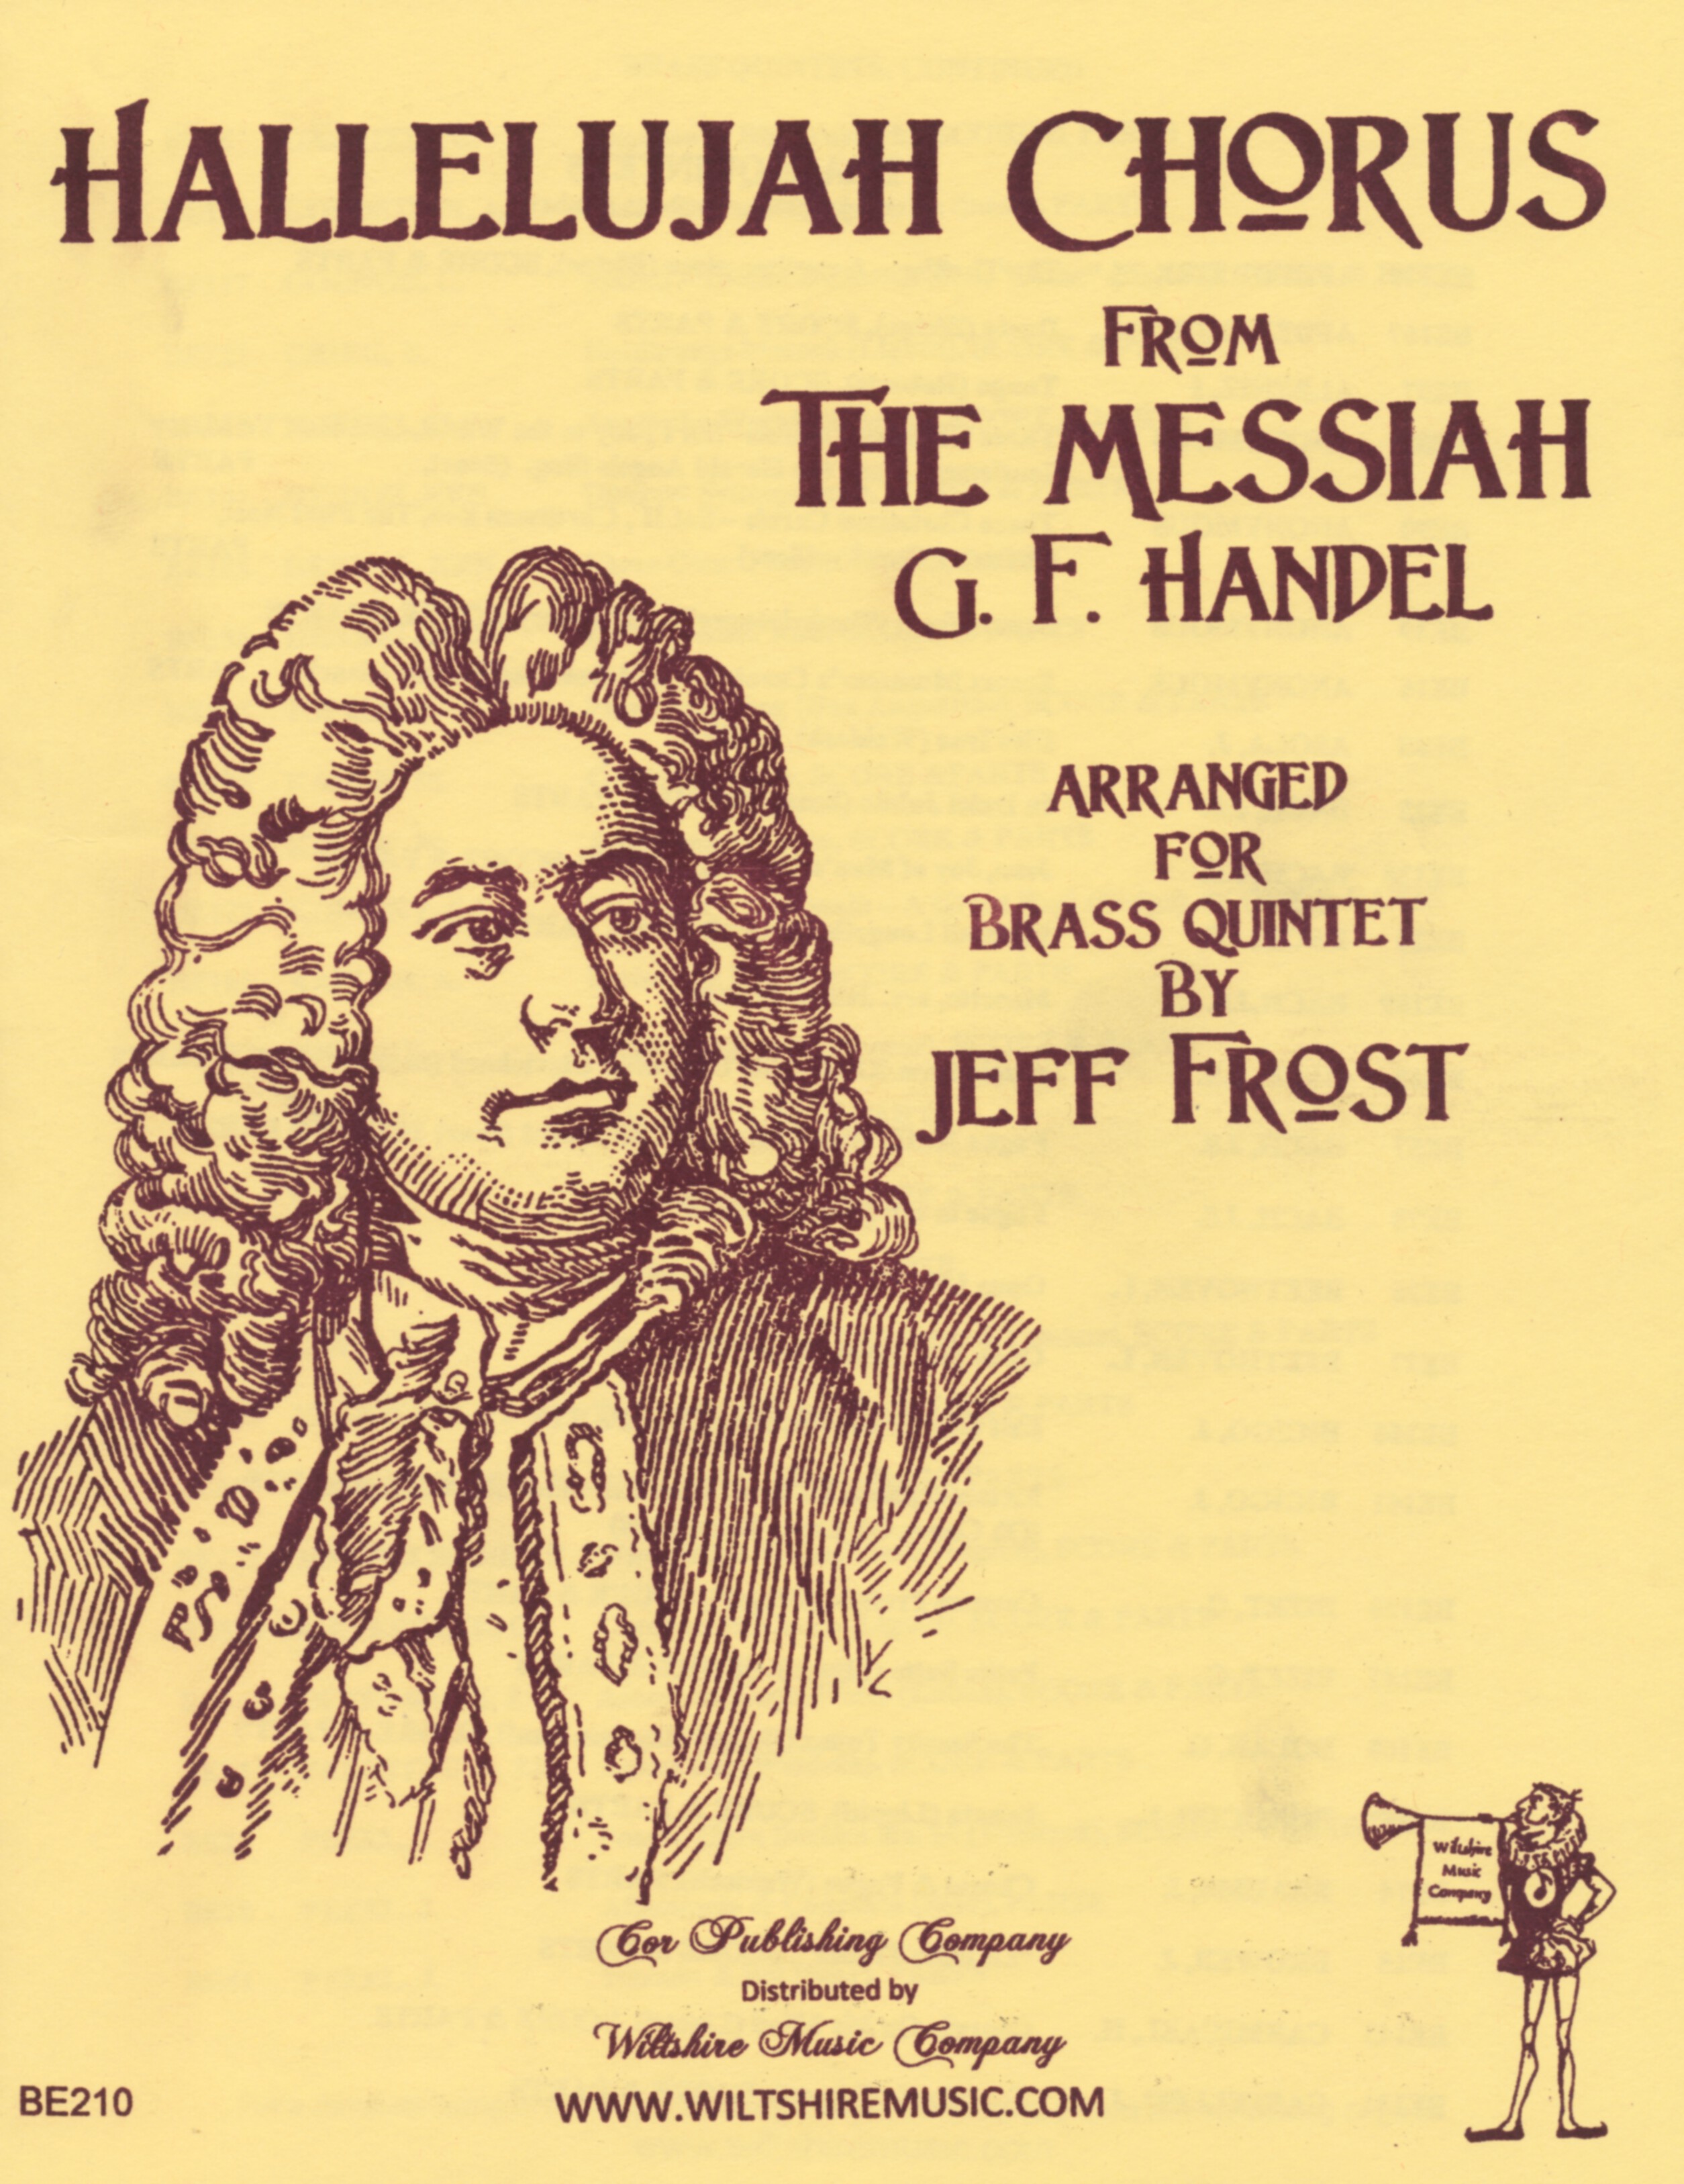 Hallelujah Chorus, G.F. Handel (Frost) for brass quintet